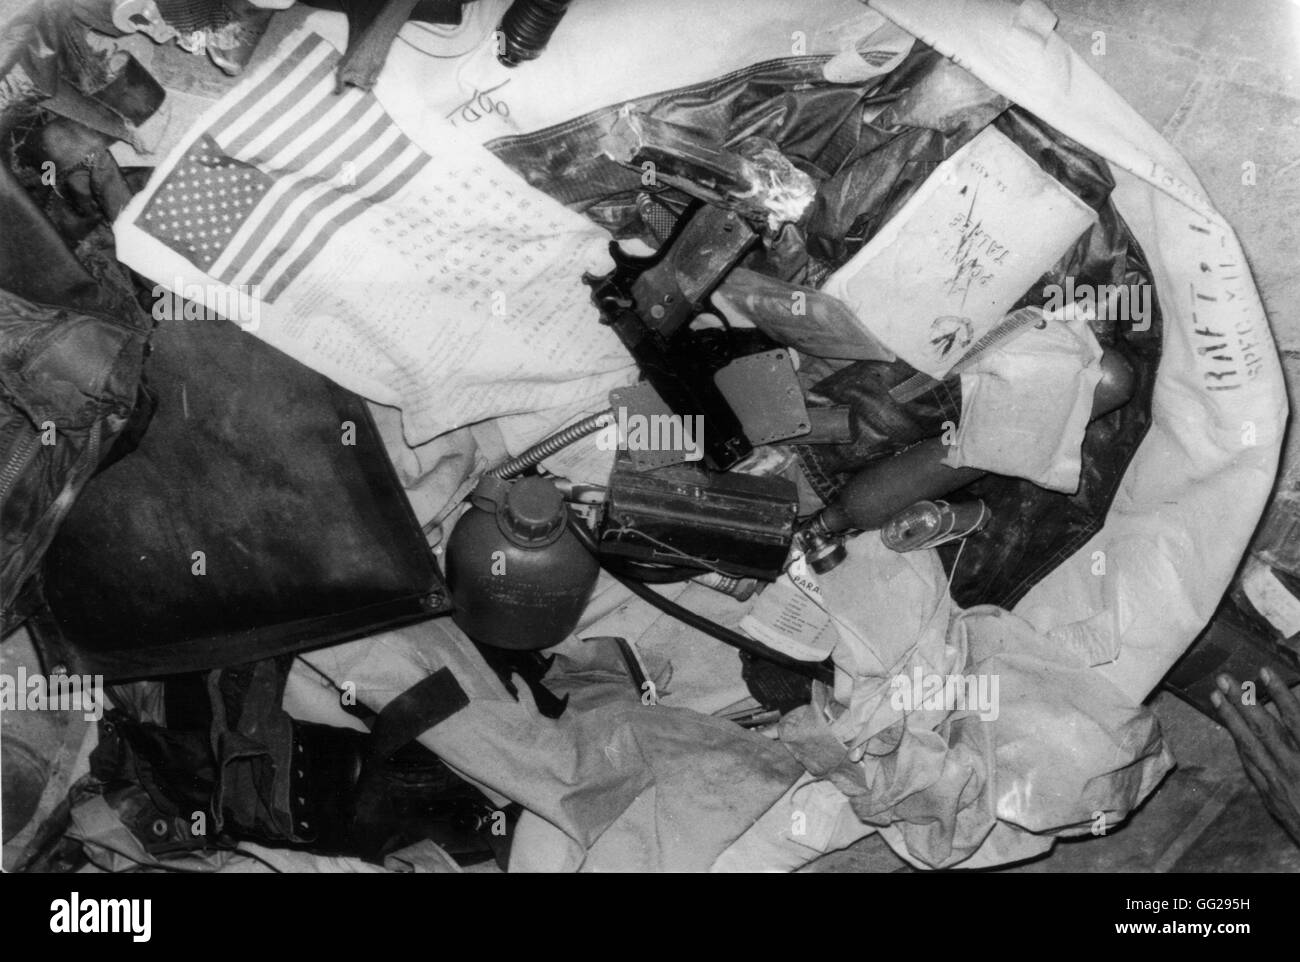 American pilote captured, equipment found with him 1966 Vietnam war Stock Photo